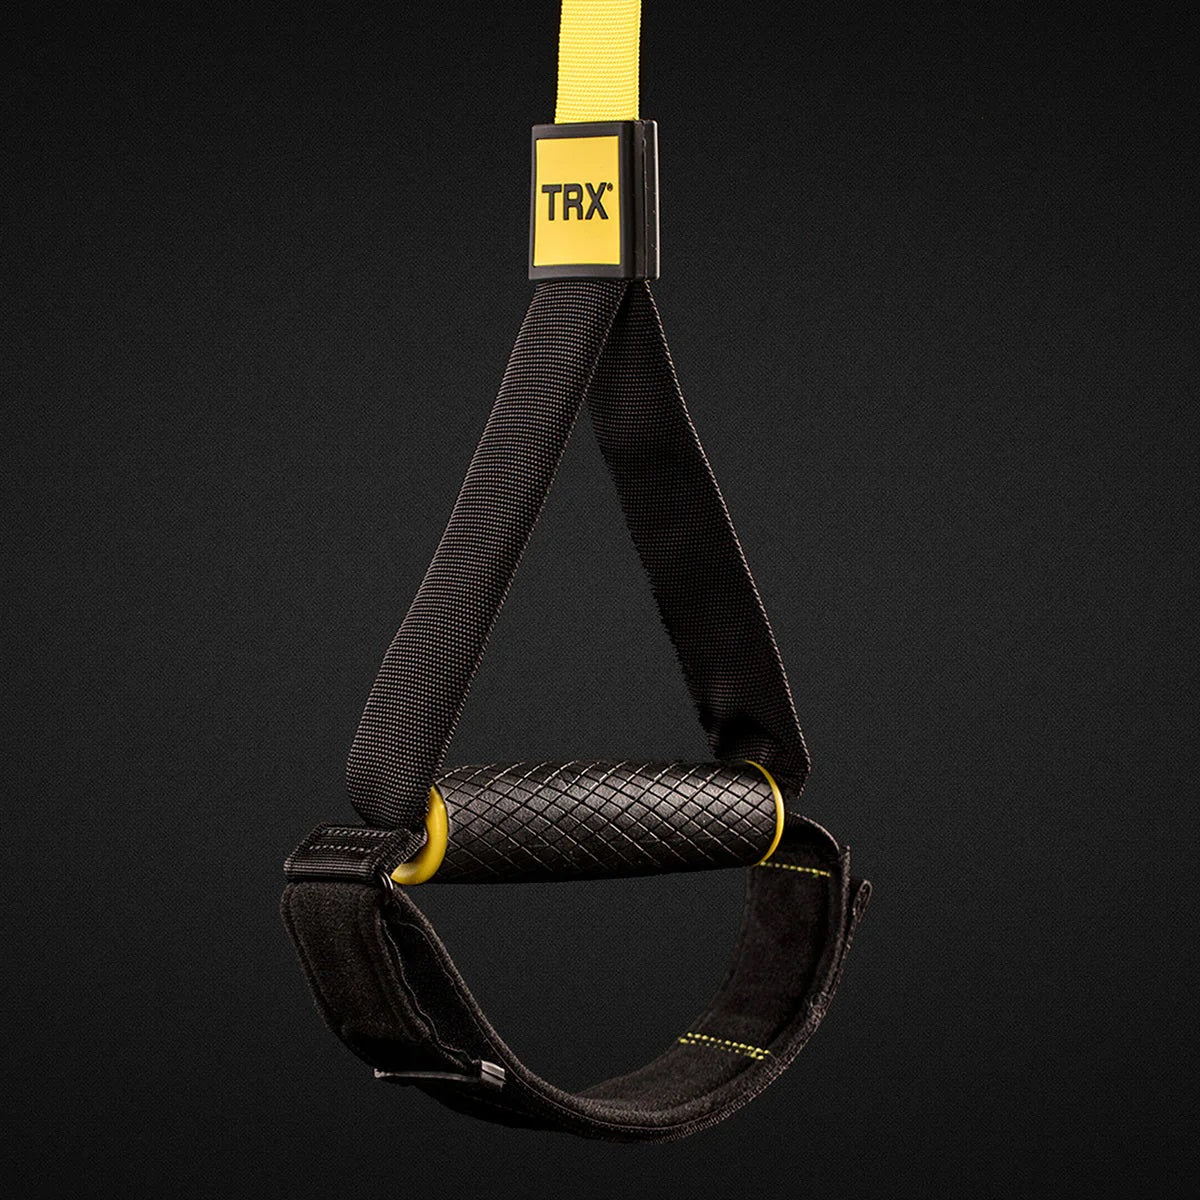 TRX® Pro4 Suspension Trainer System